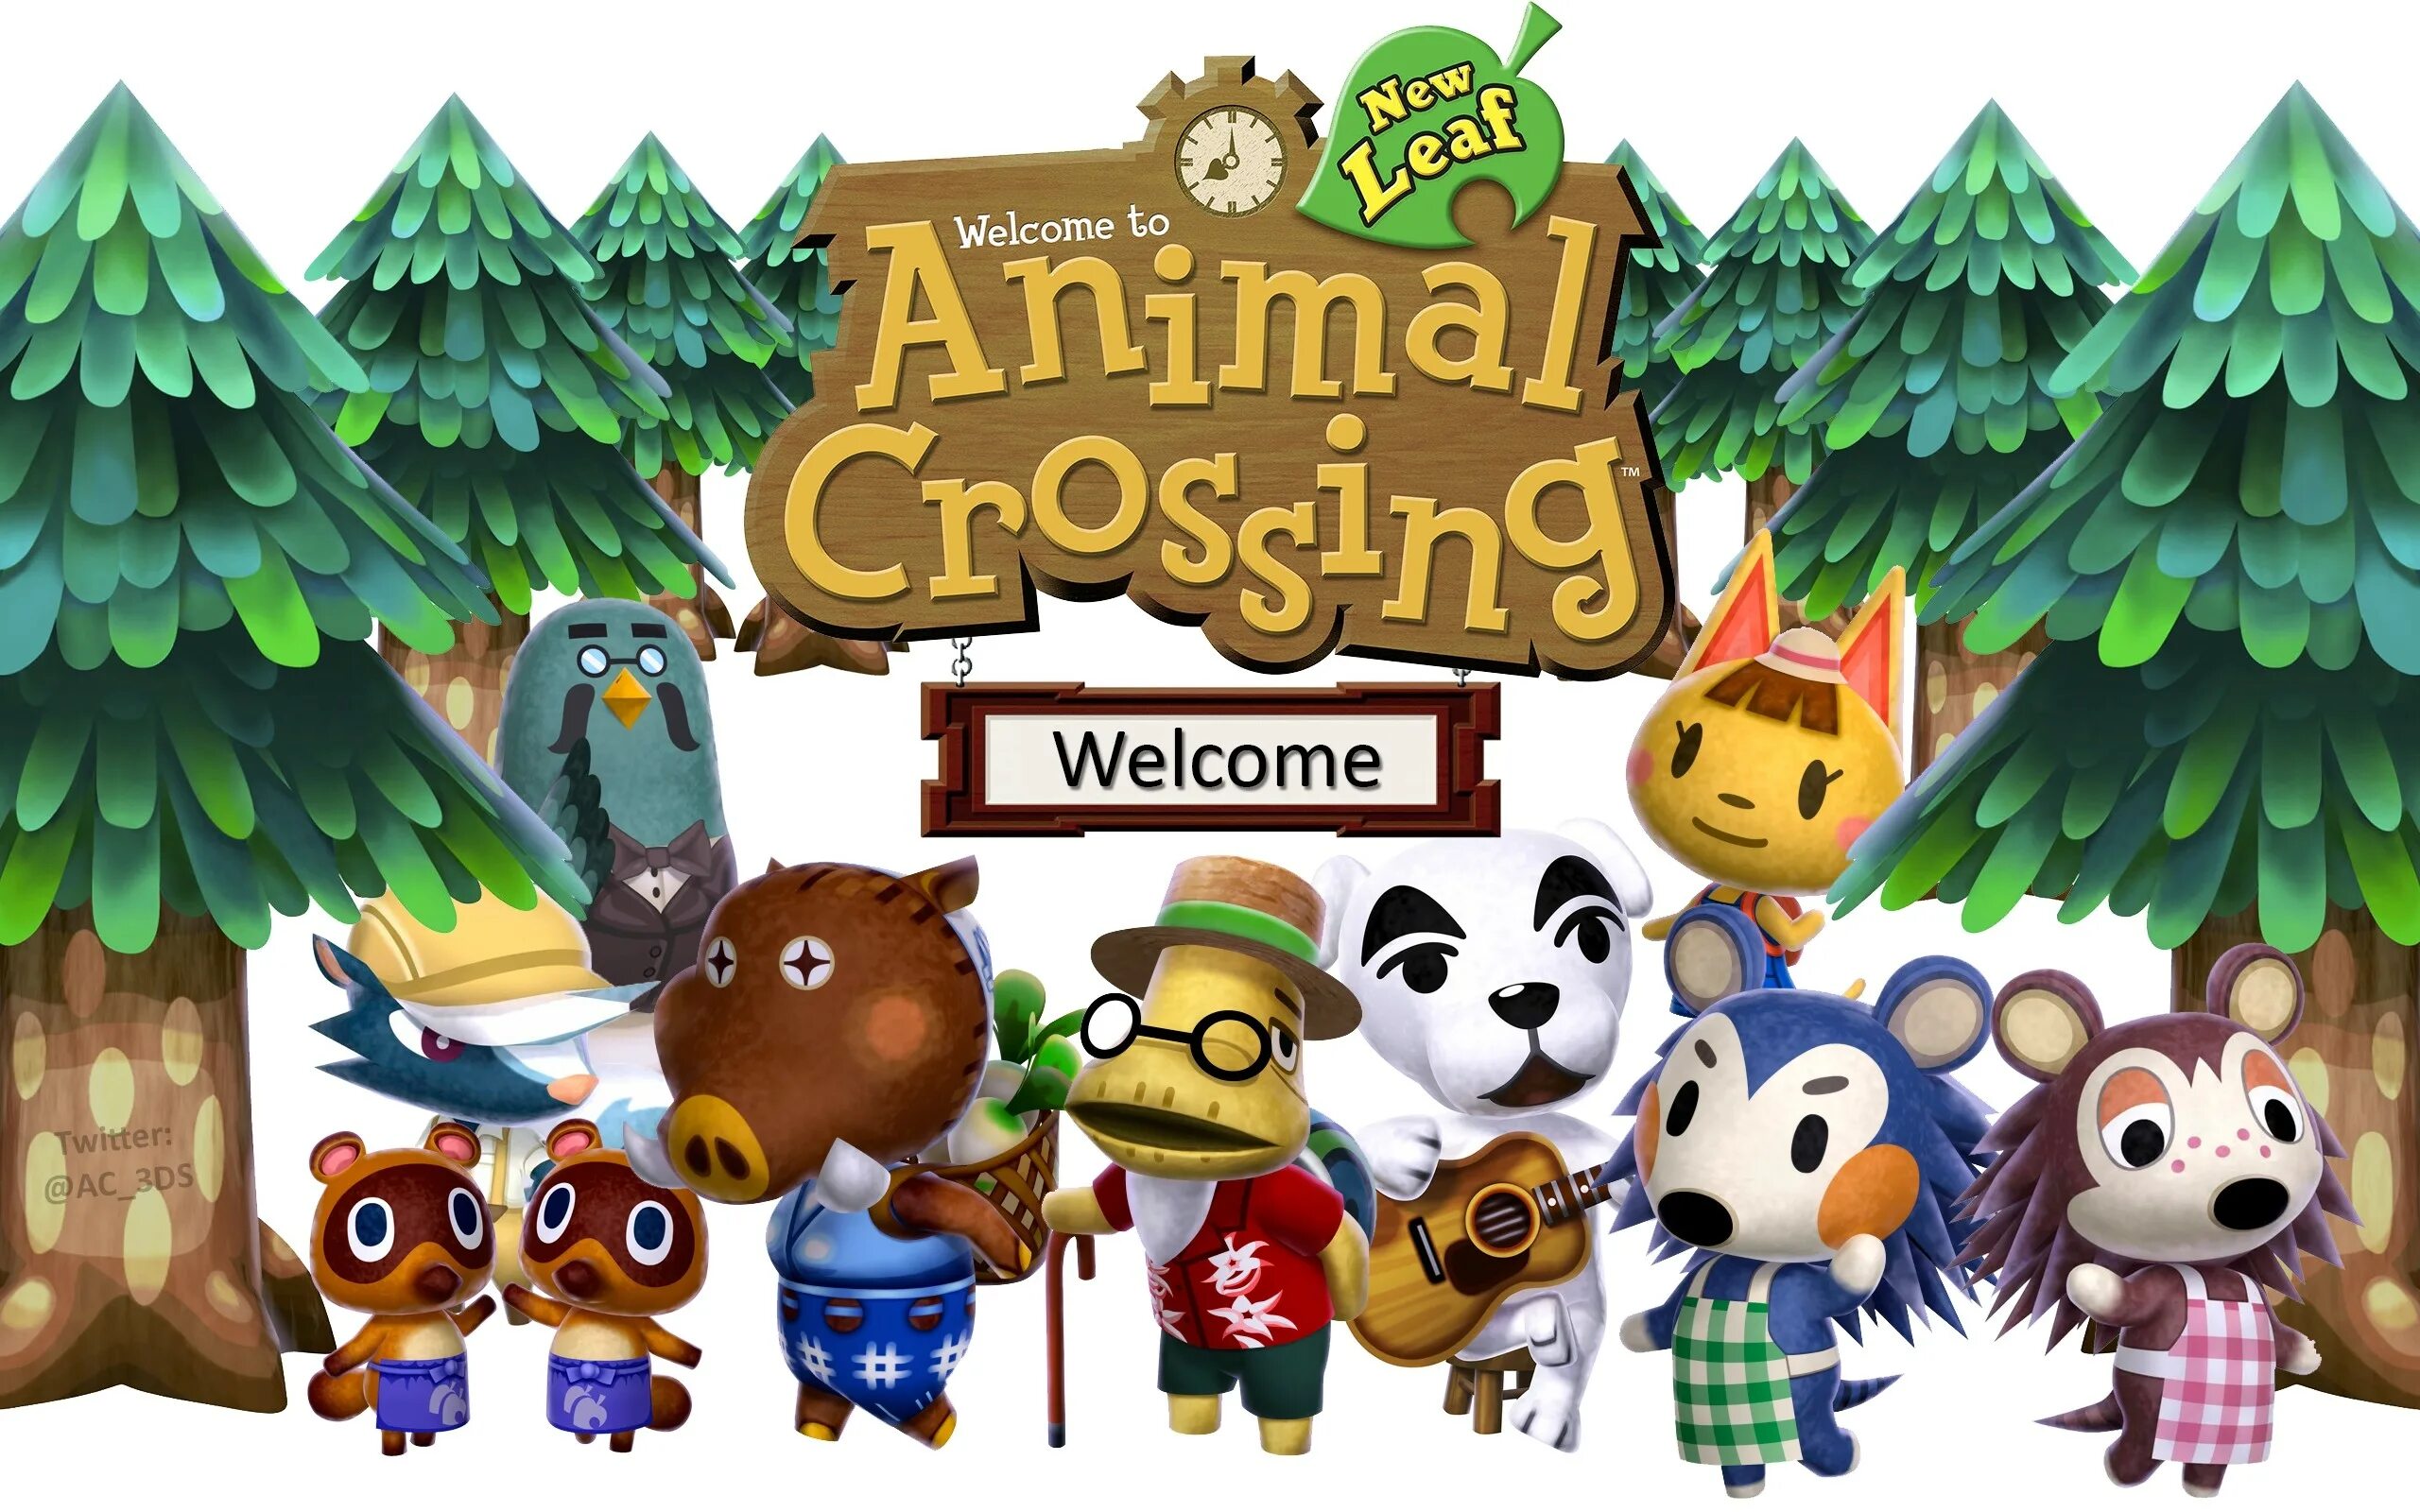 Энимал Кроссинг New Leaf. Энимал Кроссинг 2001. Энимал Кроссинг персонажи. Animal Crossing New Leaf. Animal crossing rus